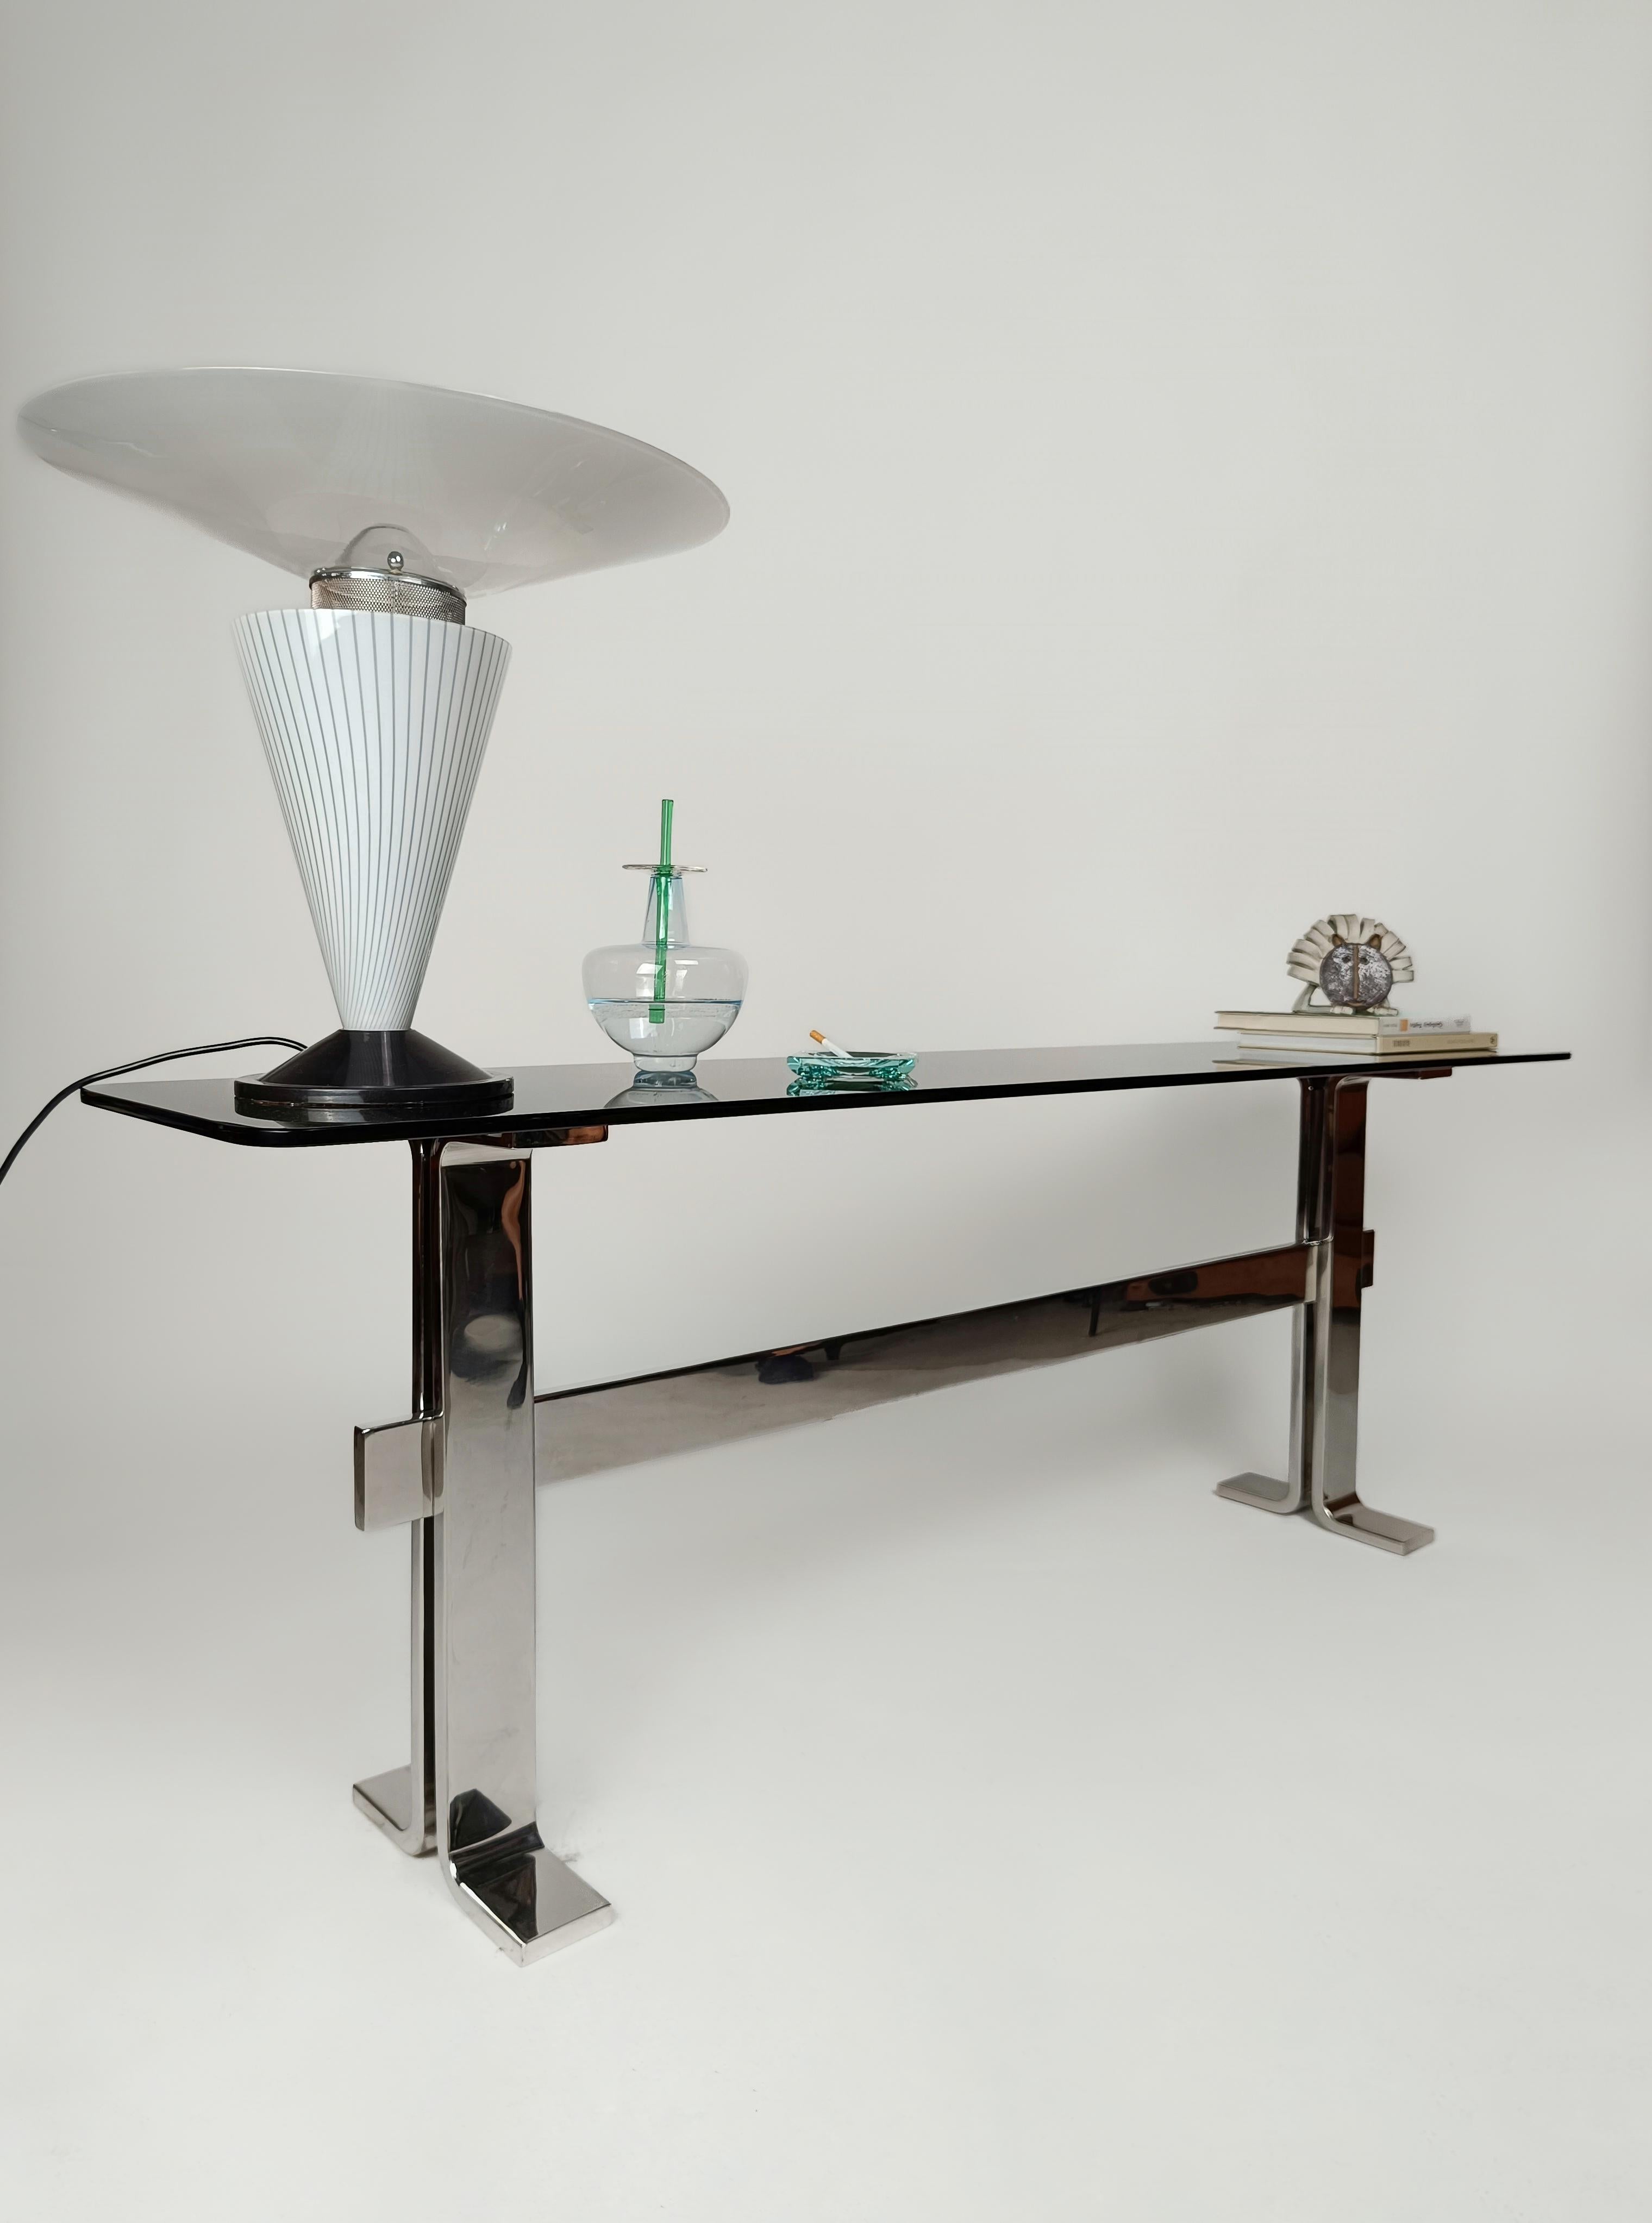 Space Age  Italian 70s Console Table attributable to Saporiti in Chrome Metal, Smoke Glass